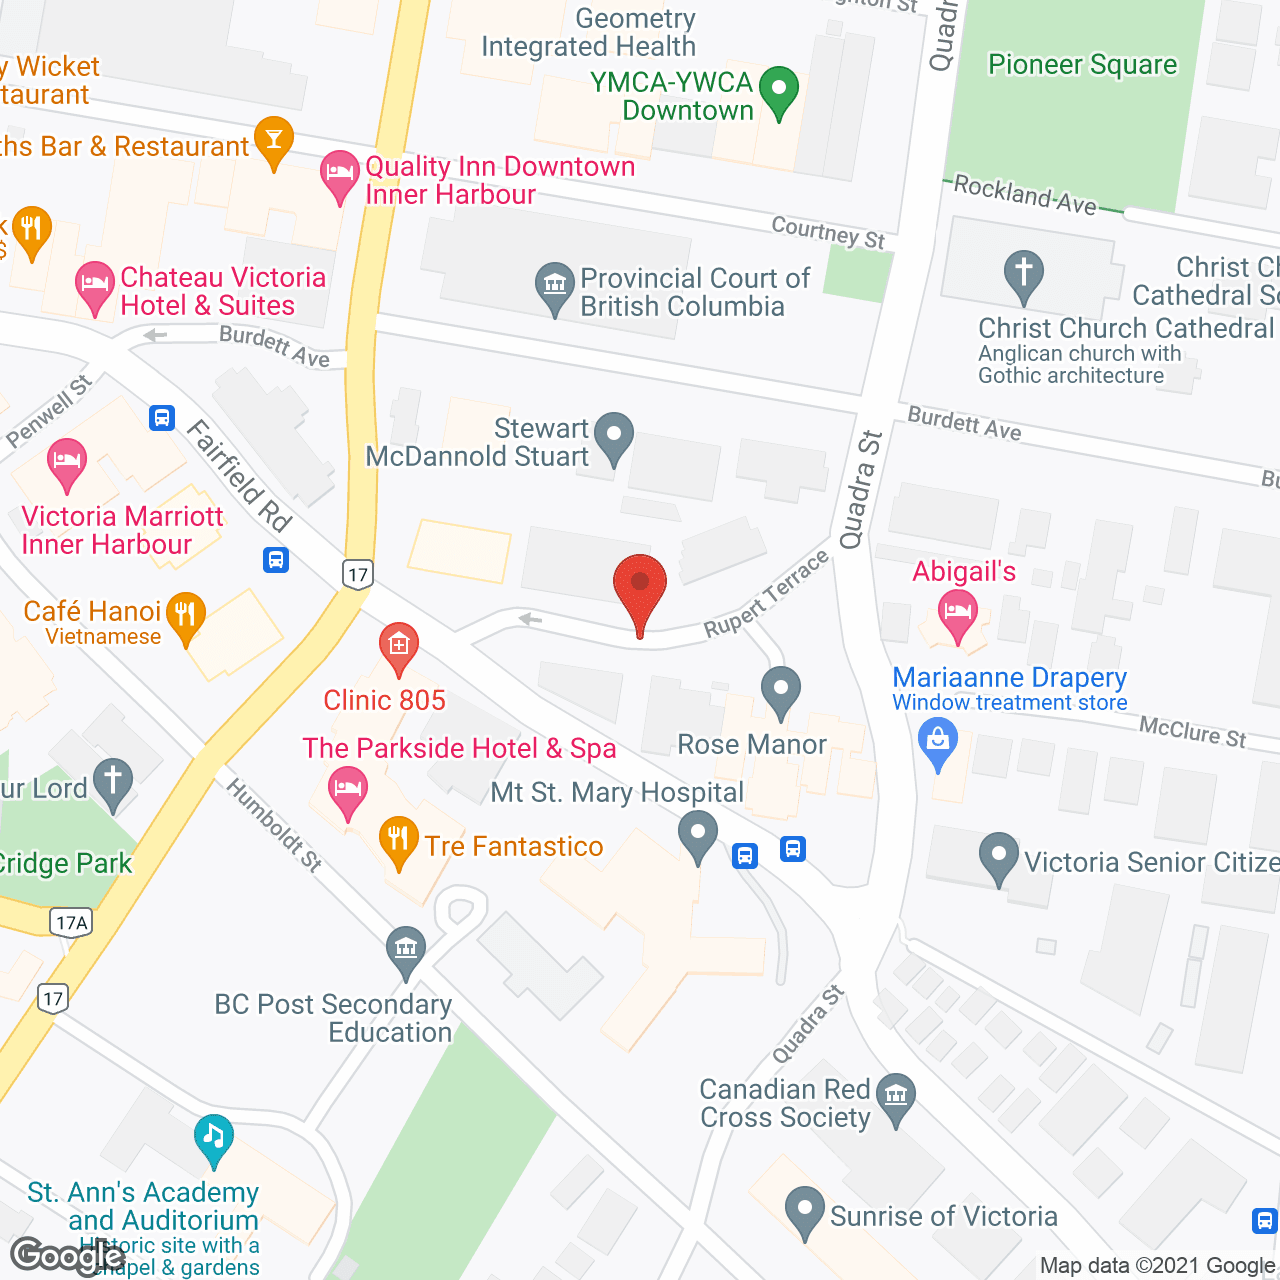 Rose Manor in google map